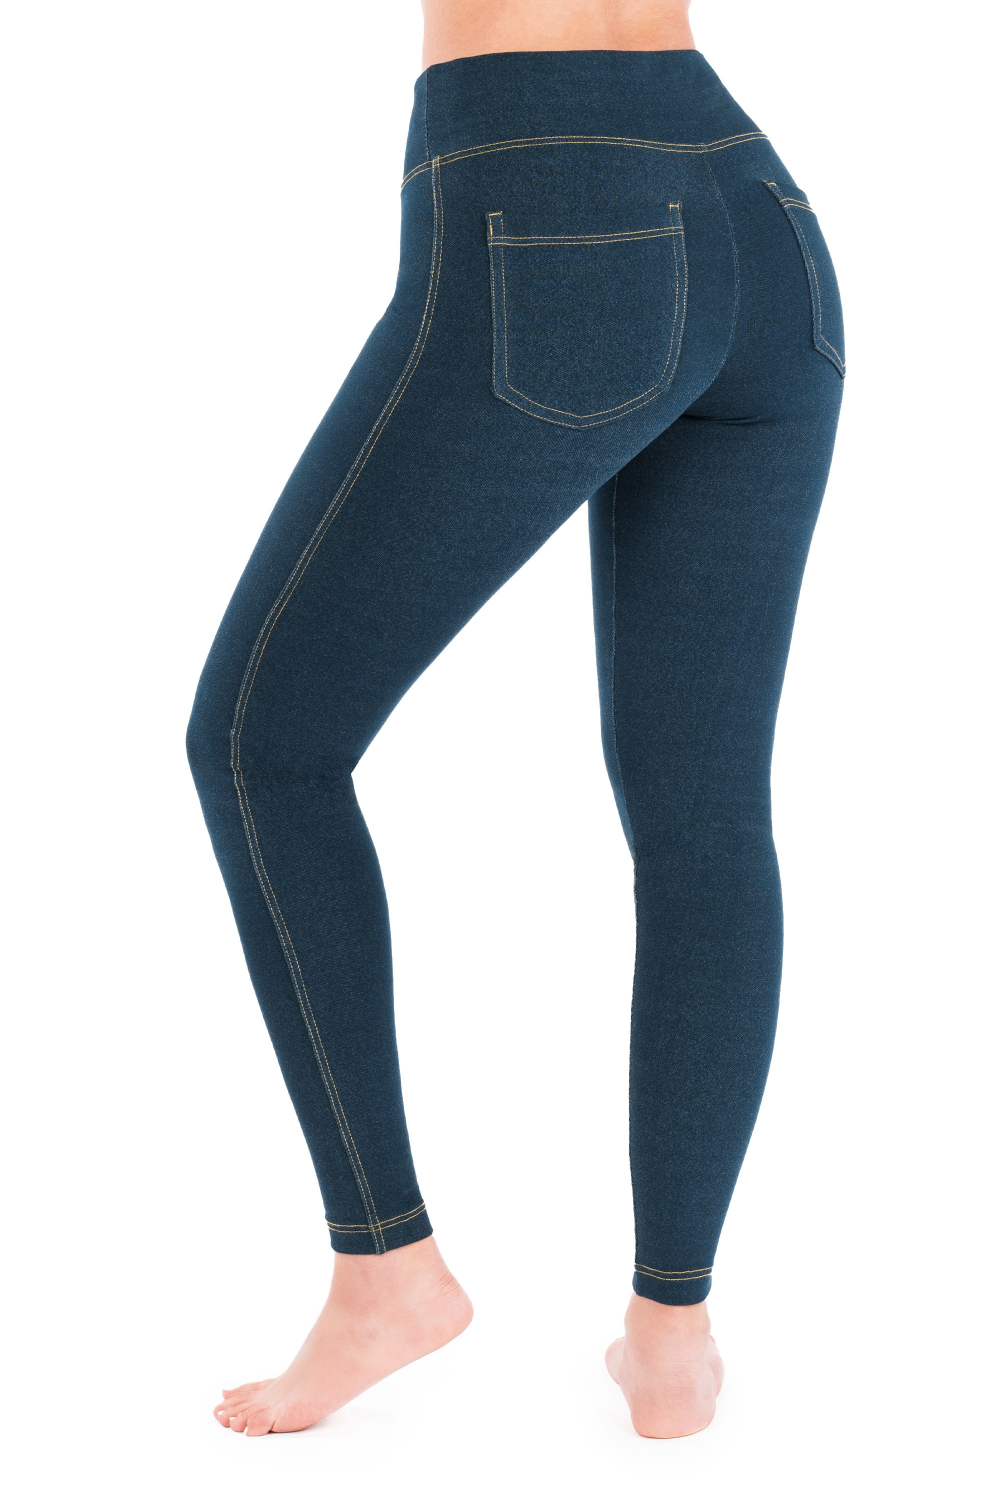 NIRLON Women's Jeggings High Waist Tummy Control Jean Leggings with Pockets  - grey - S : : Fashion